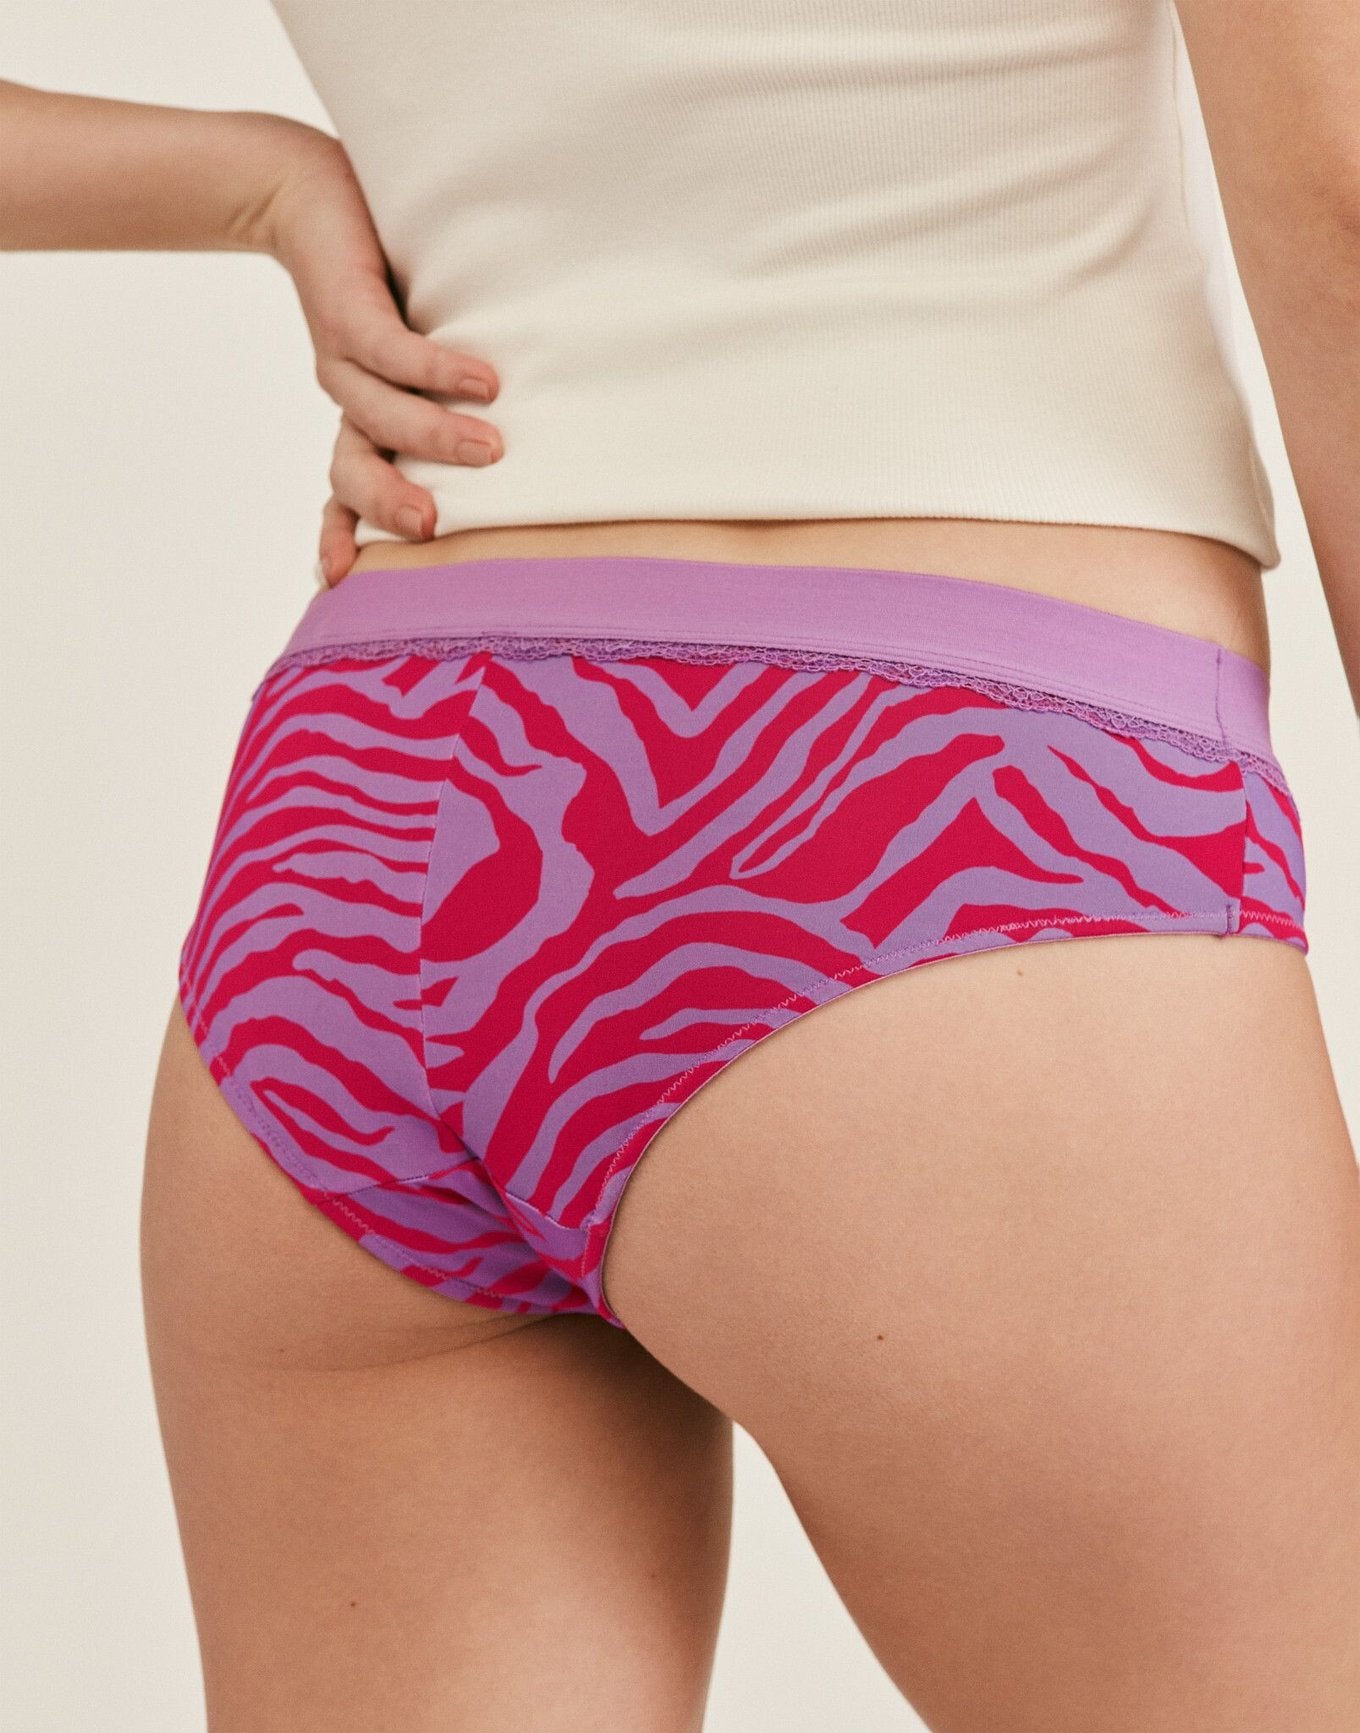 Joyja Cindy period-proof panty in color Secret Safari C02 and shape cheeky